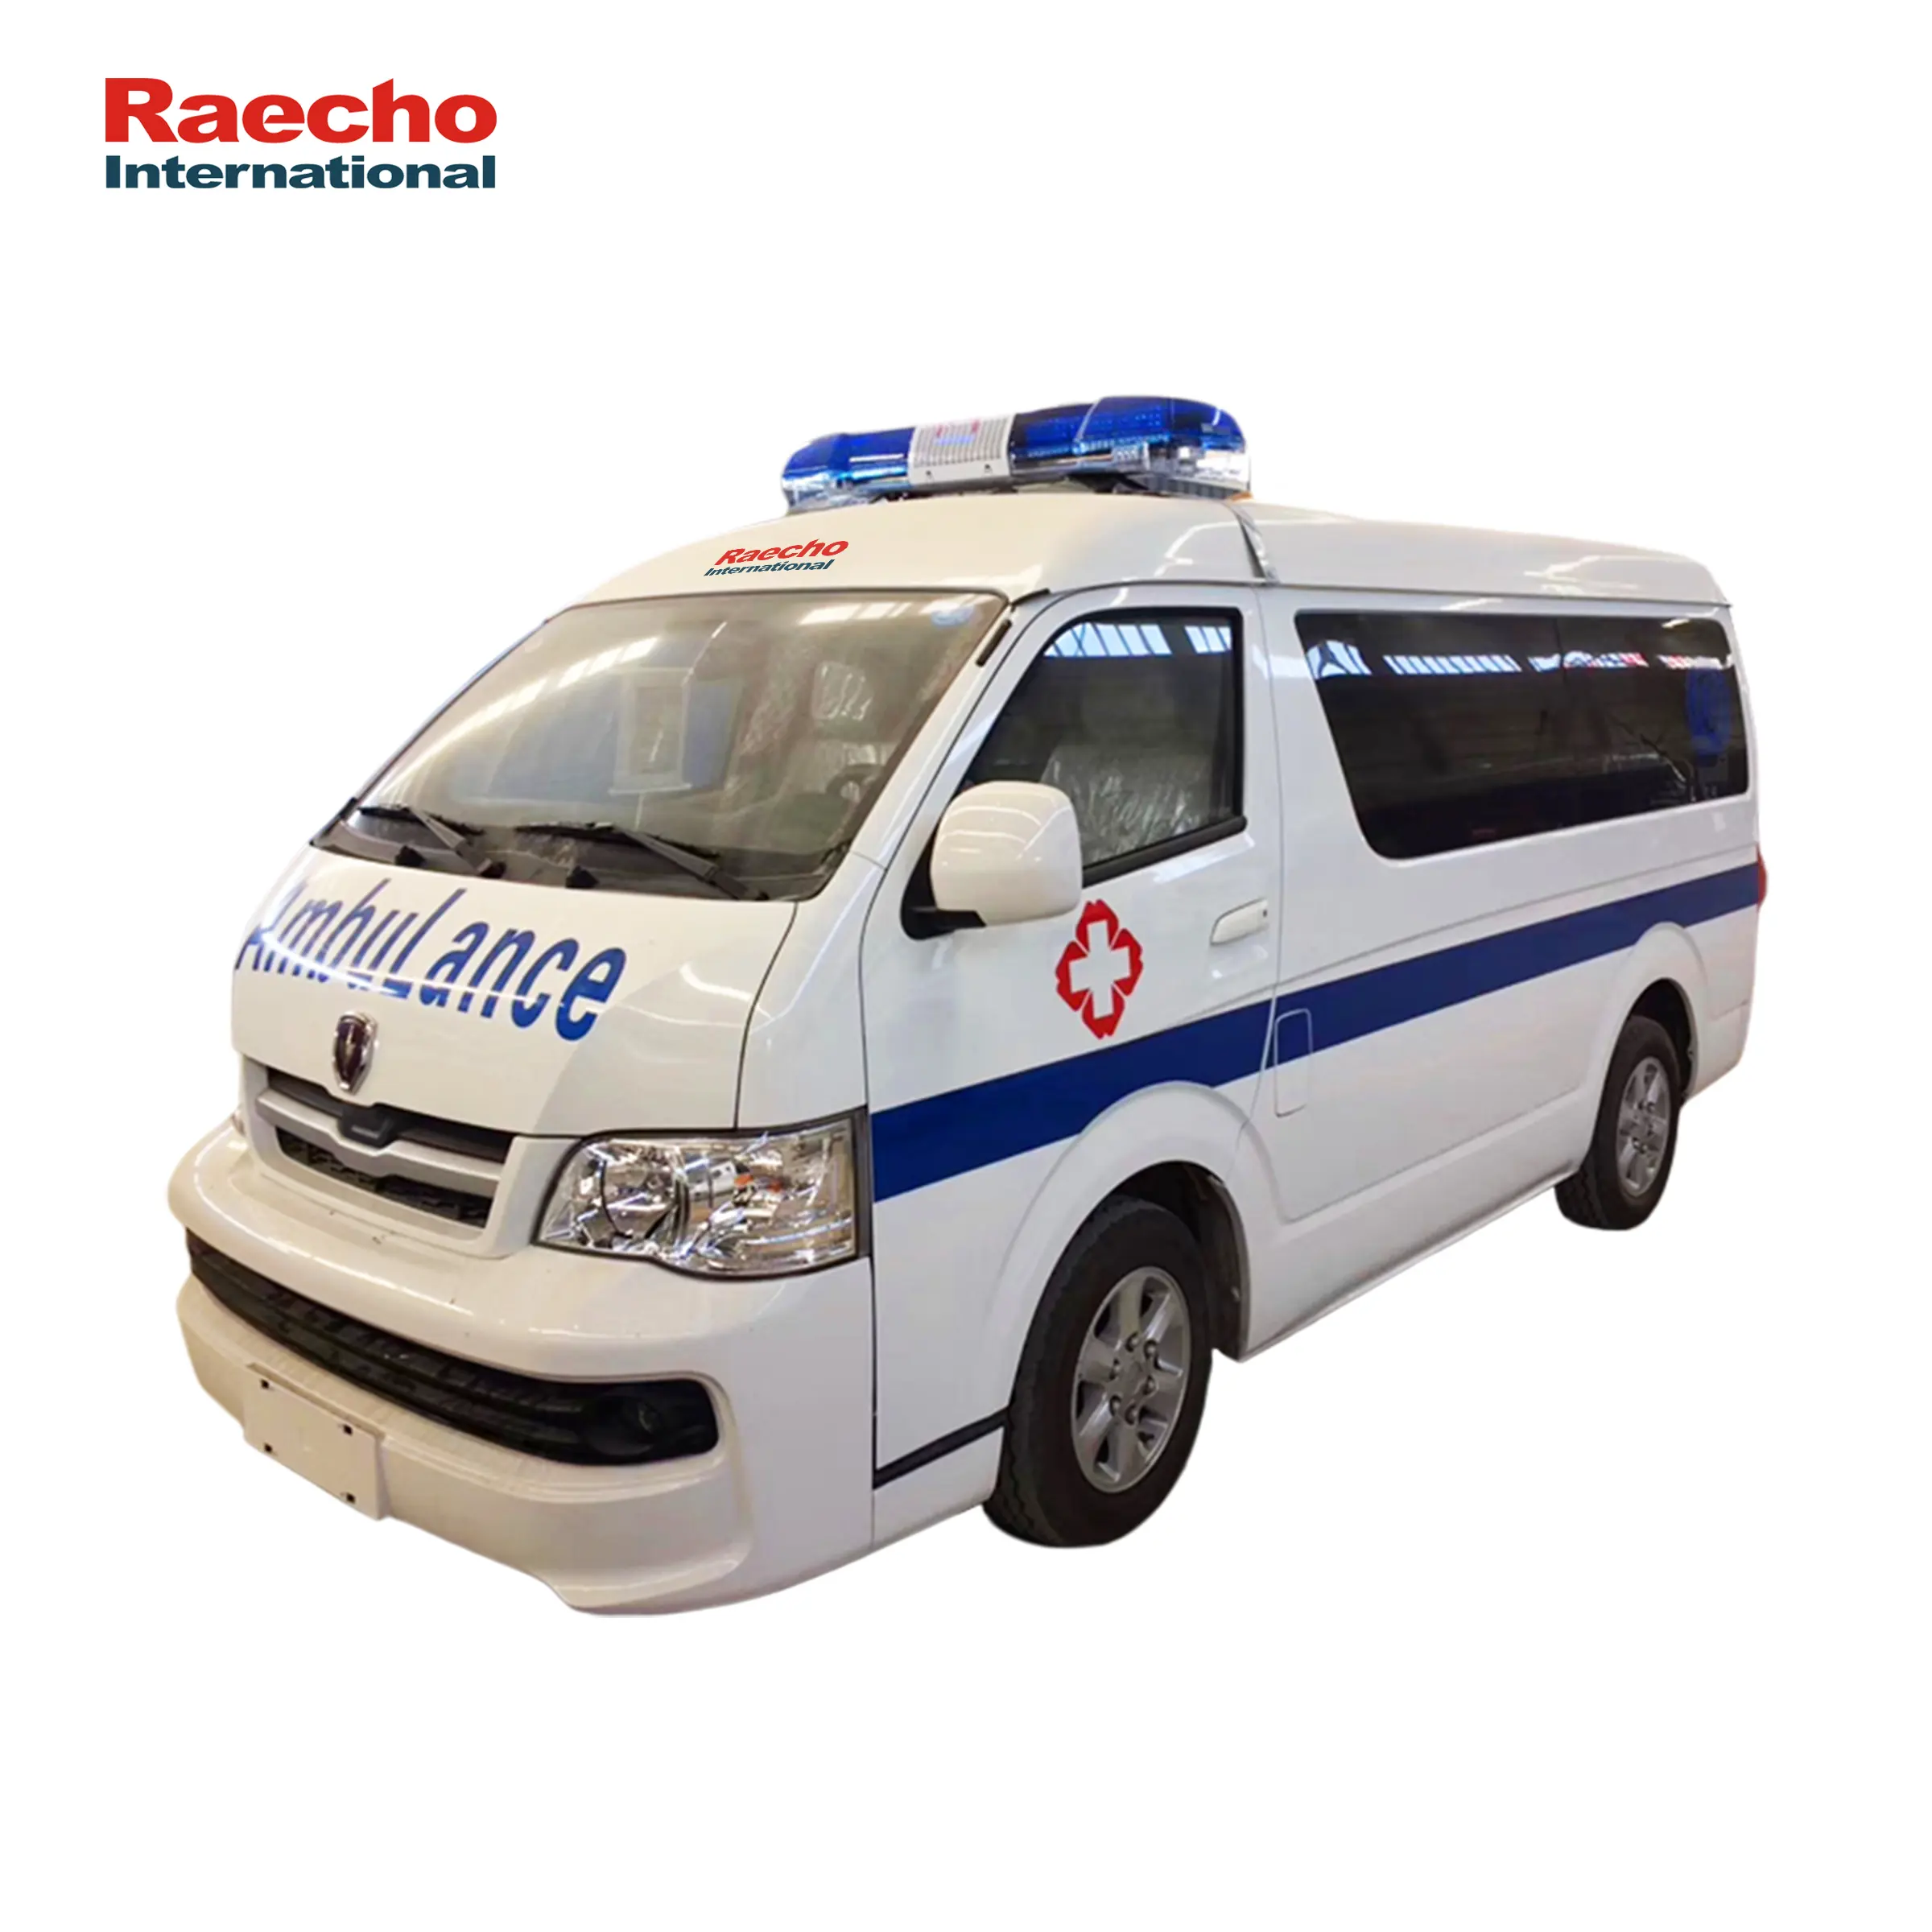 First Aid Ambulance Vehicle Ambulances Cars For Sale